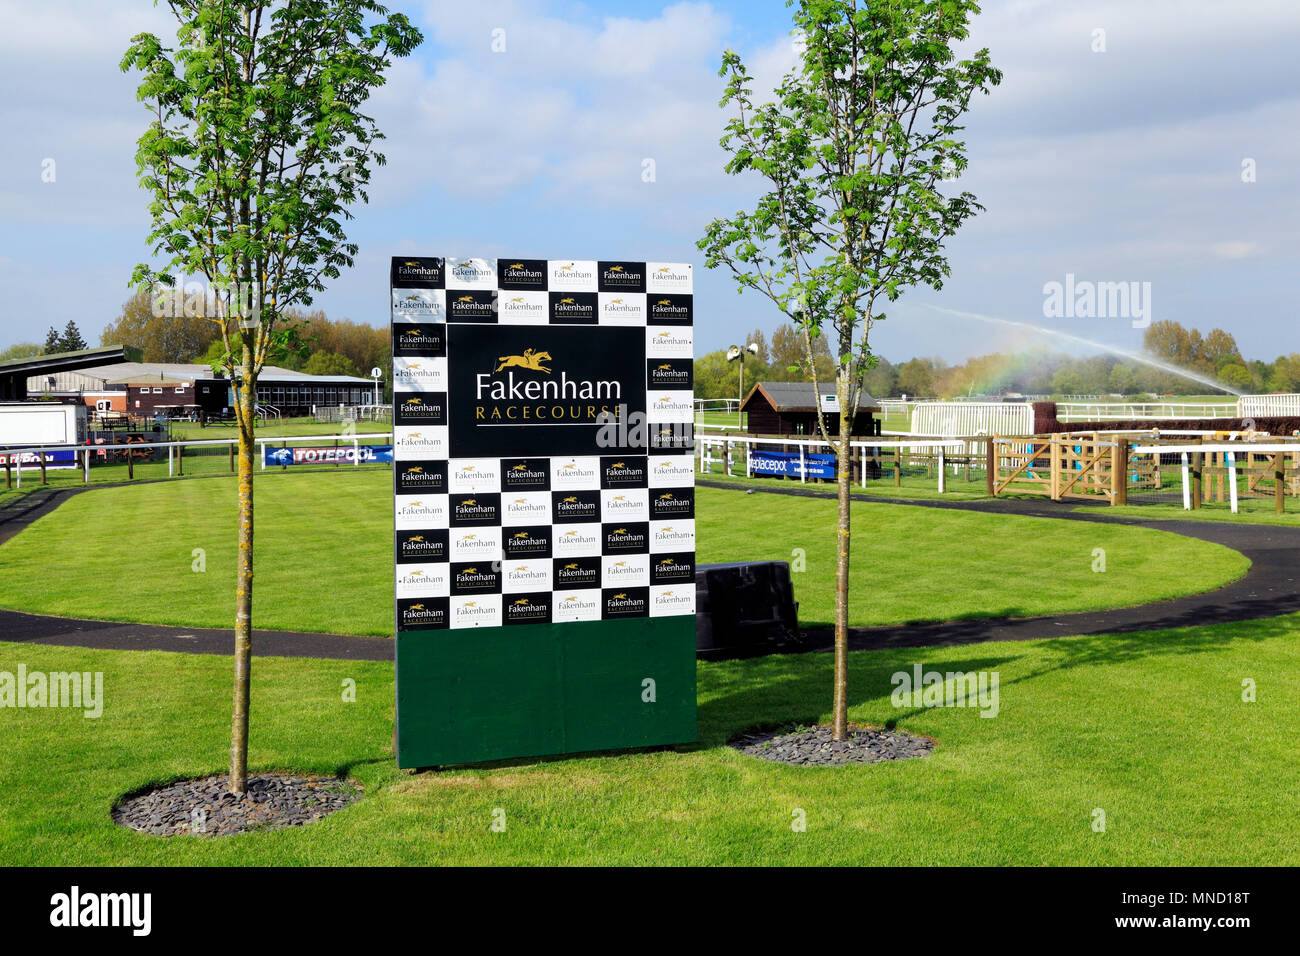 Fakenham Race Course, sign, paddock, horse racing, Norfolk, England, UK Stock Photo